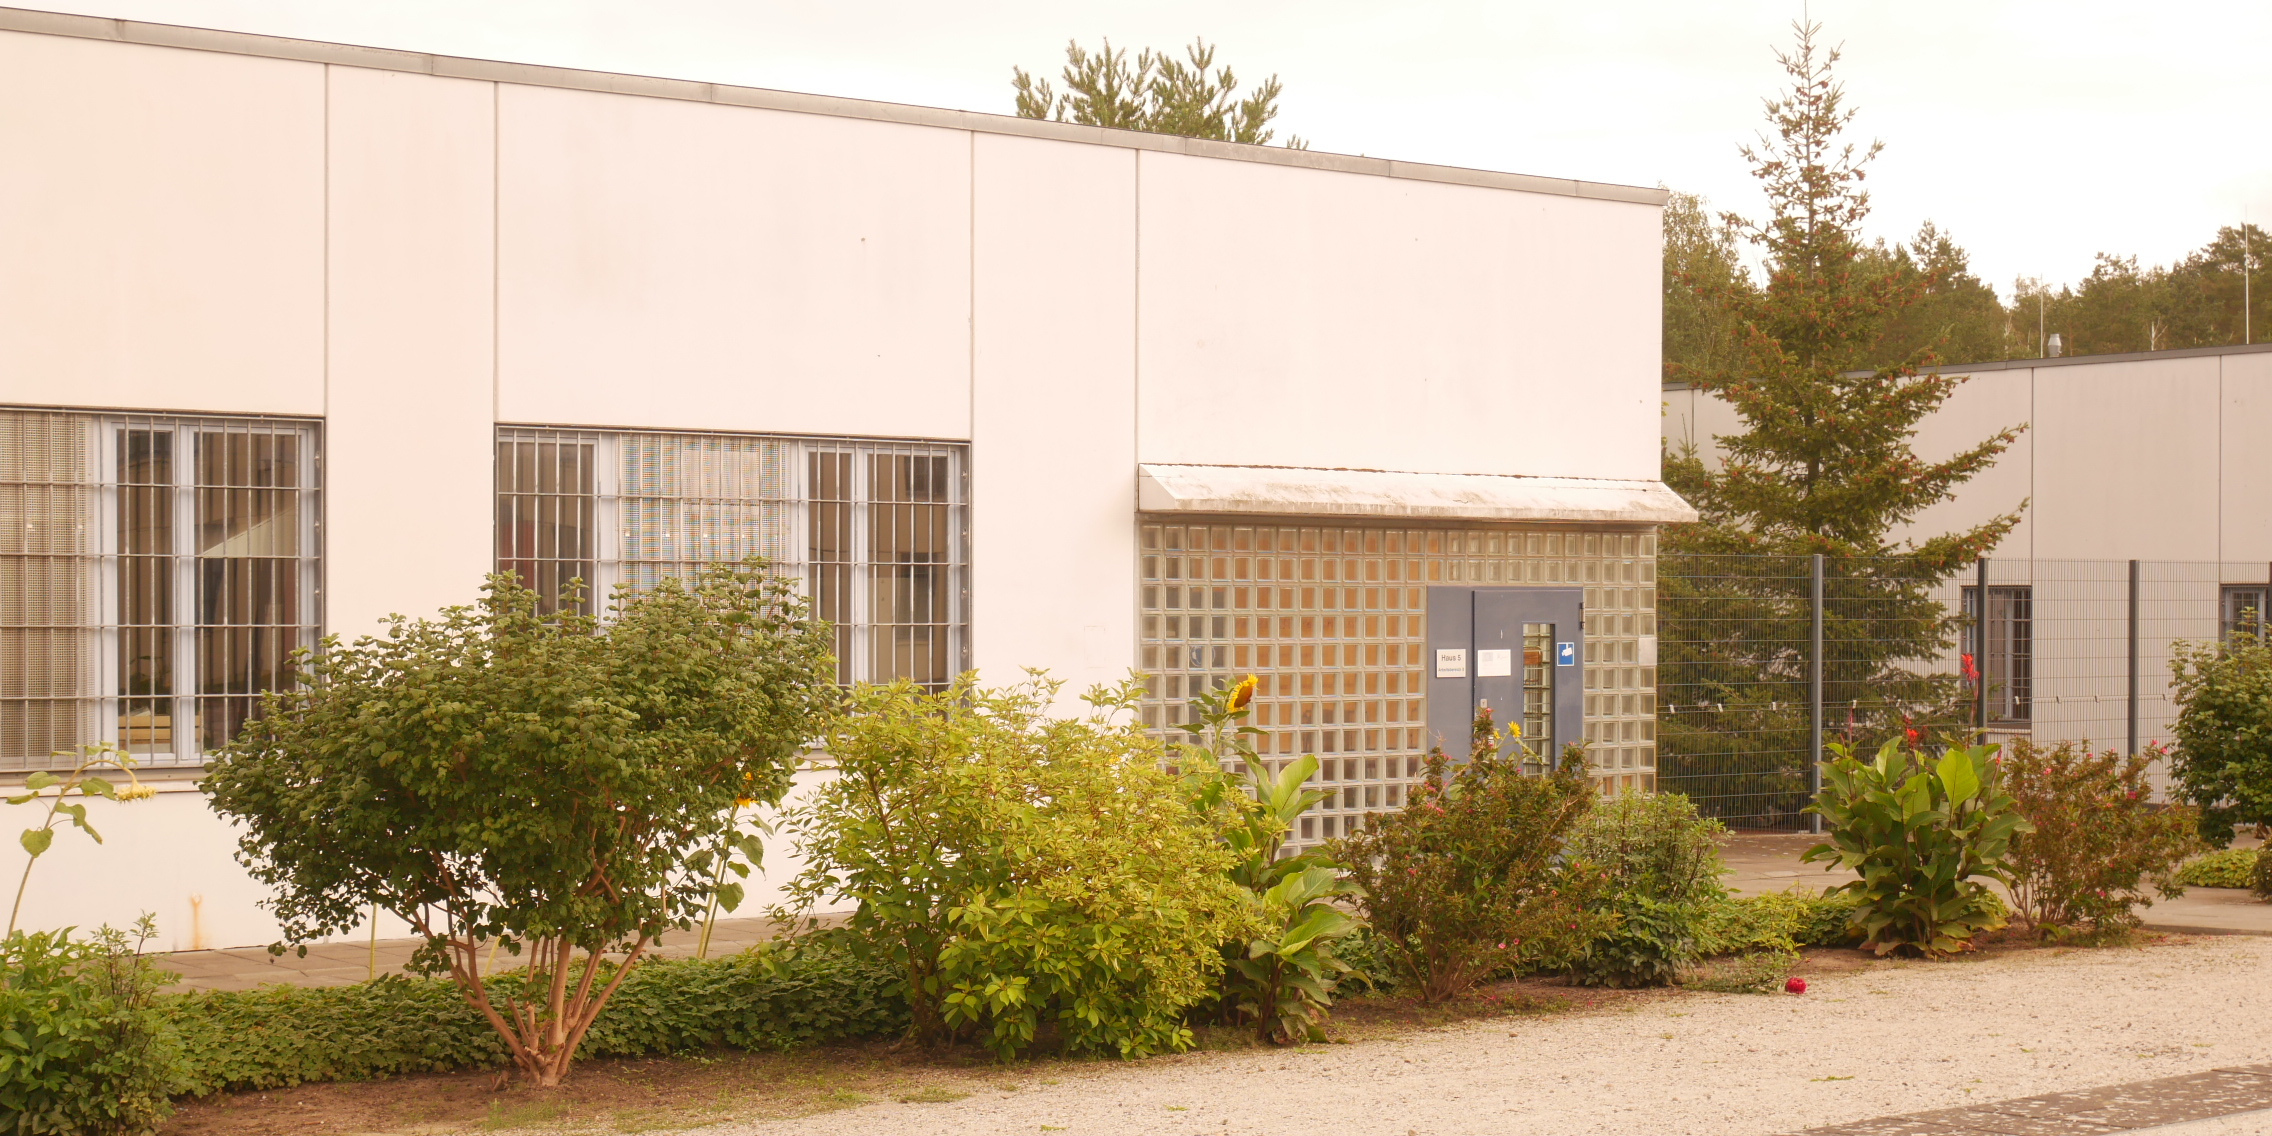 Werkstatt des Arbeitstrainings Holz und Keramik der JVA Nord-Brandenburg, Teilanstalt Neuruppin-Wulkow